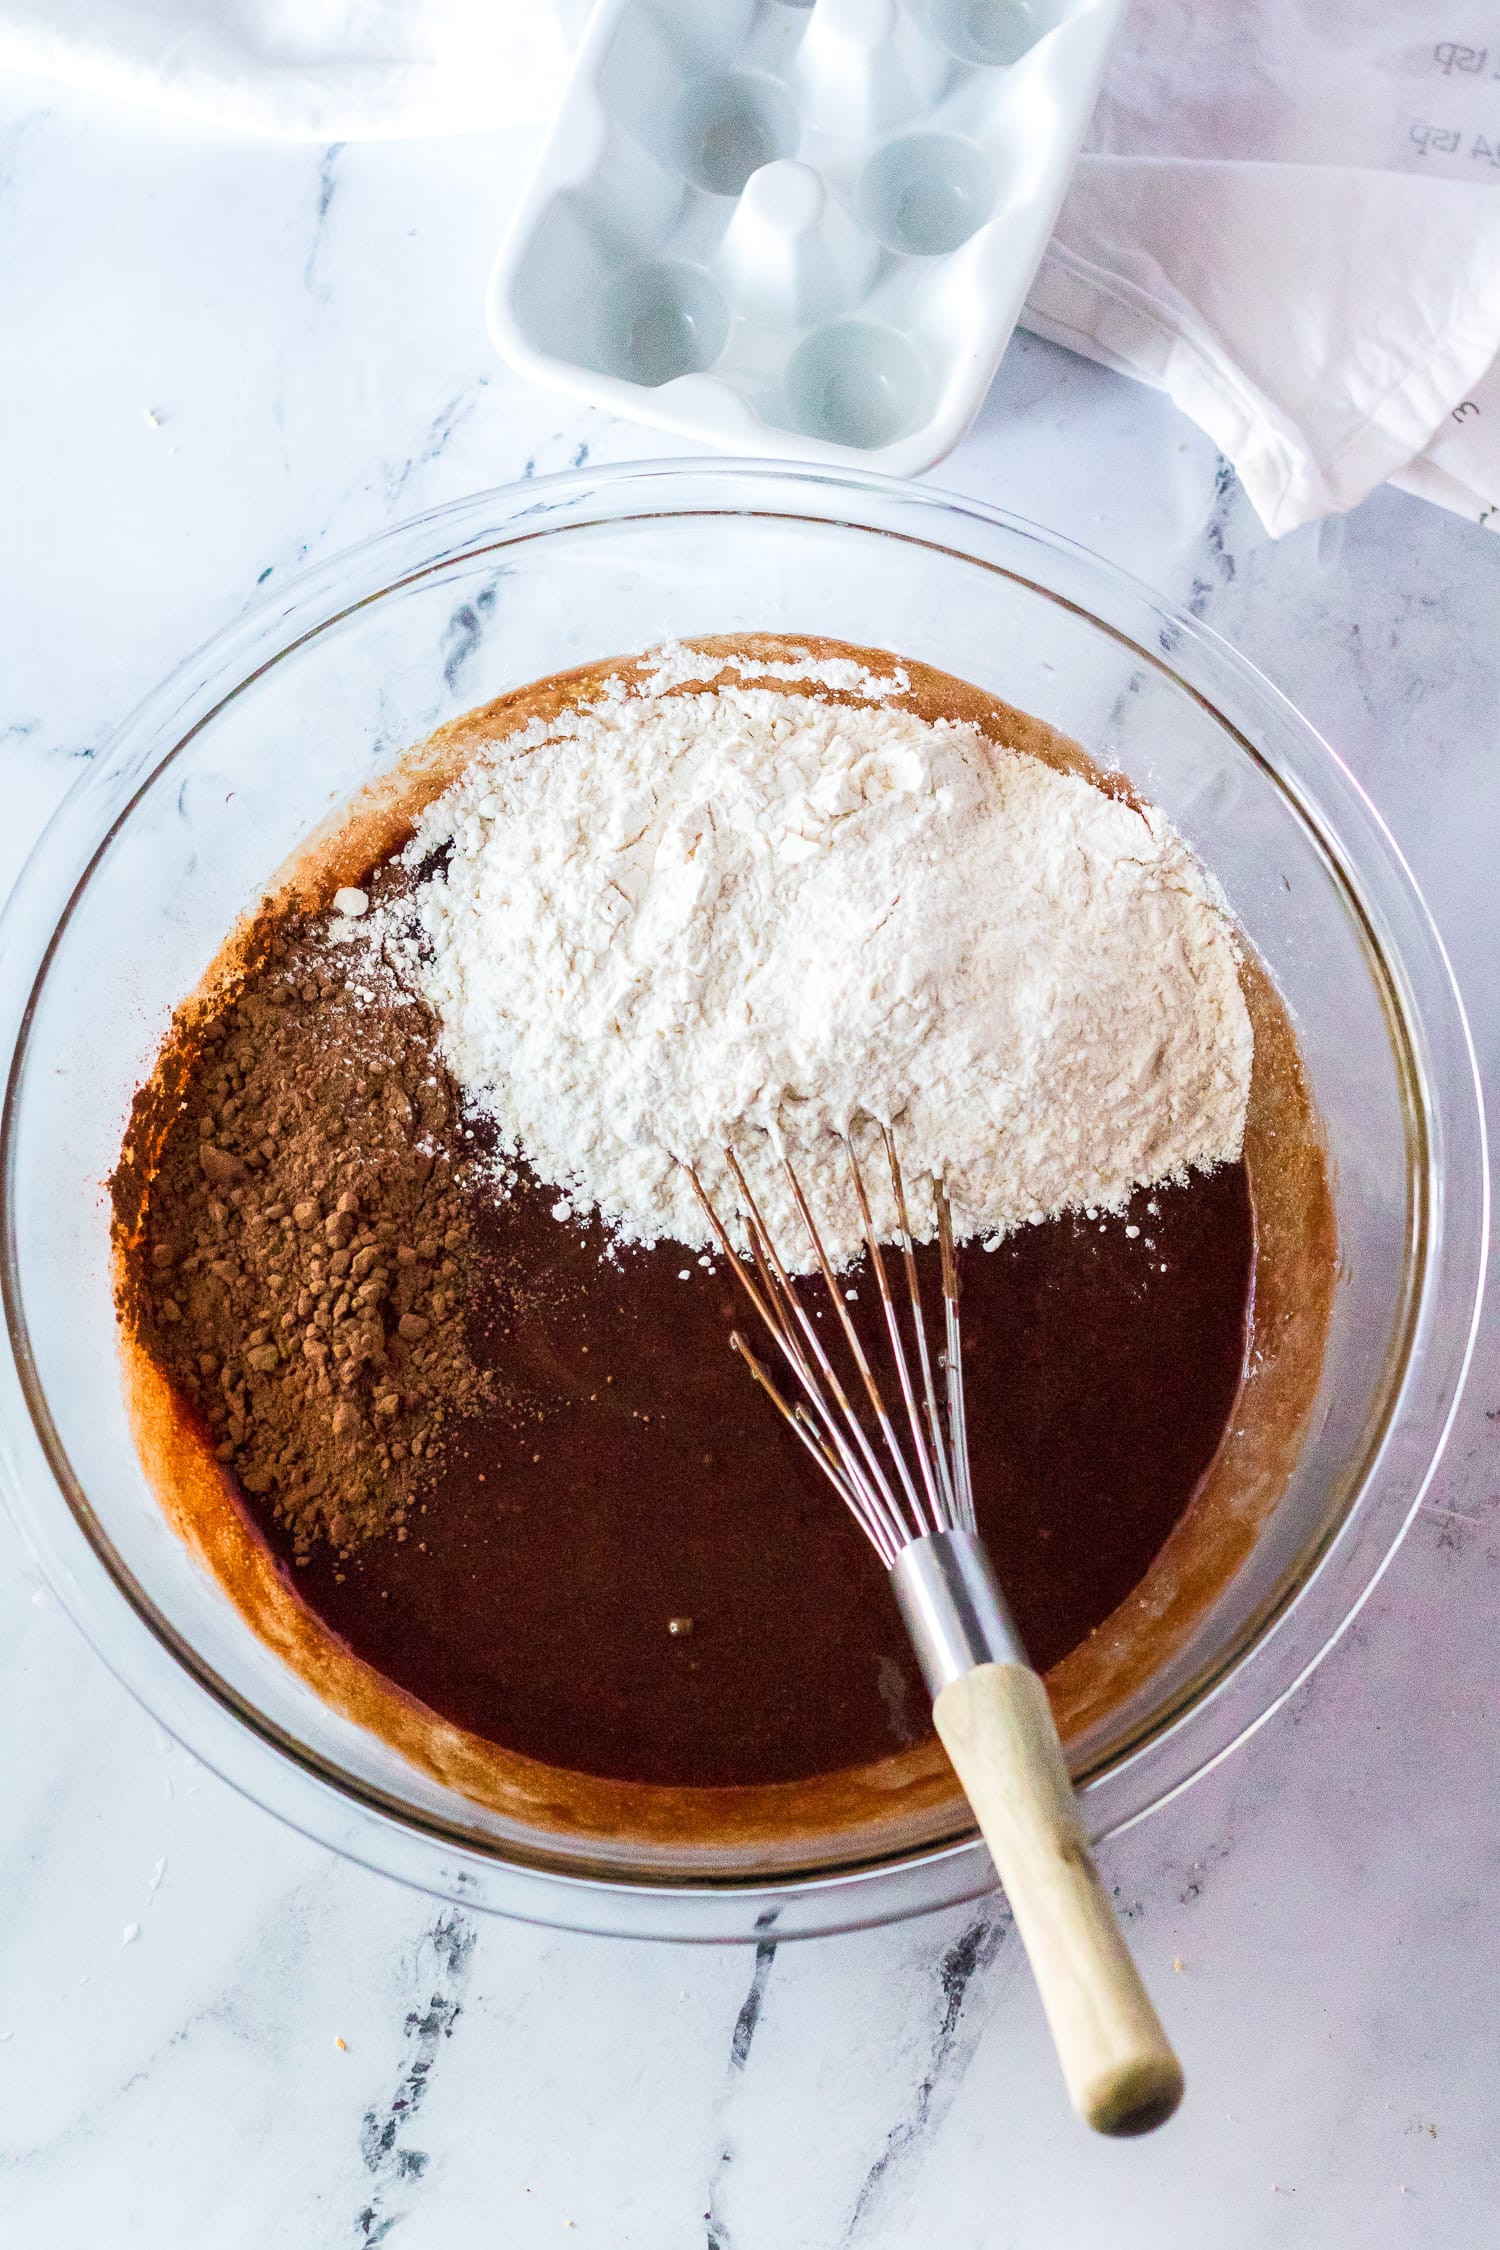 Stirring flour into brownie batter